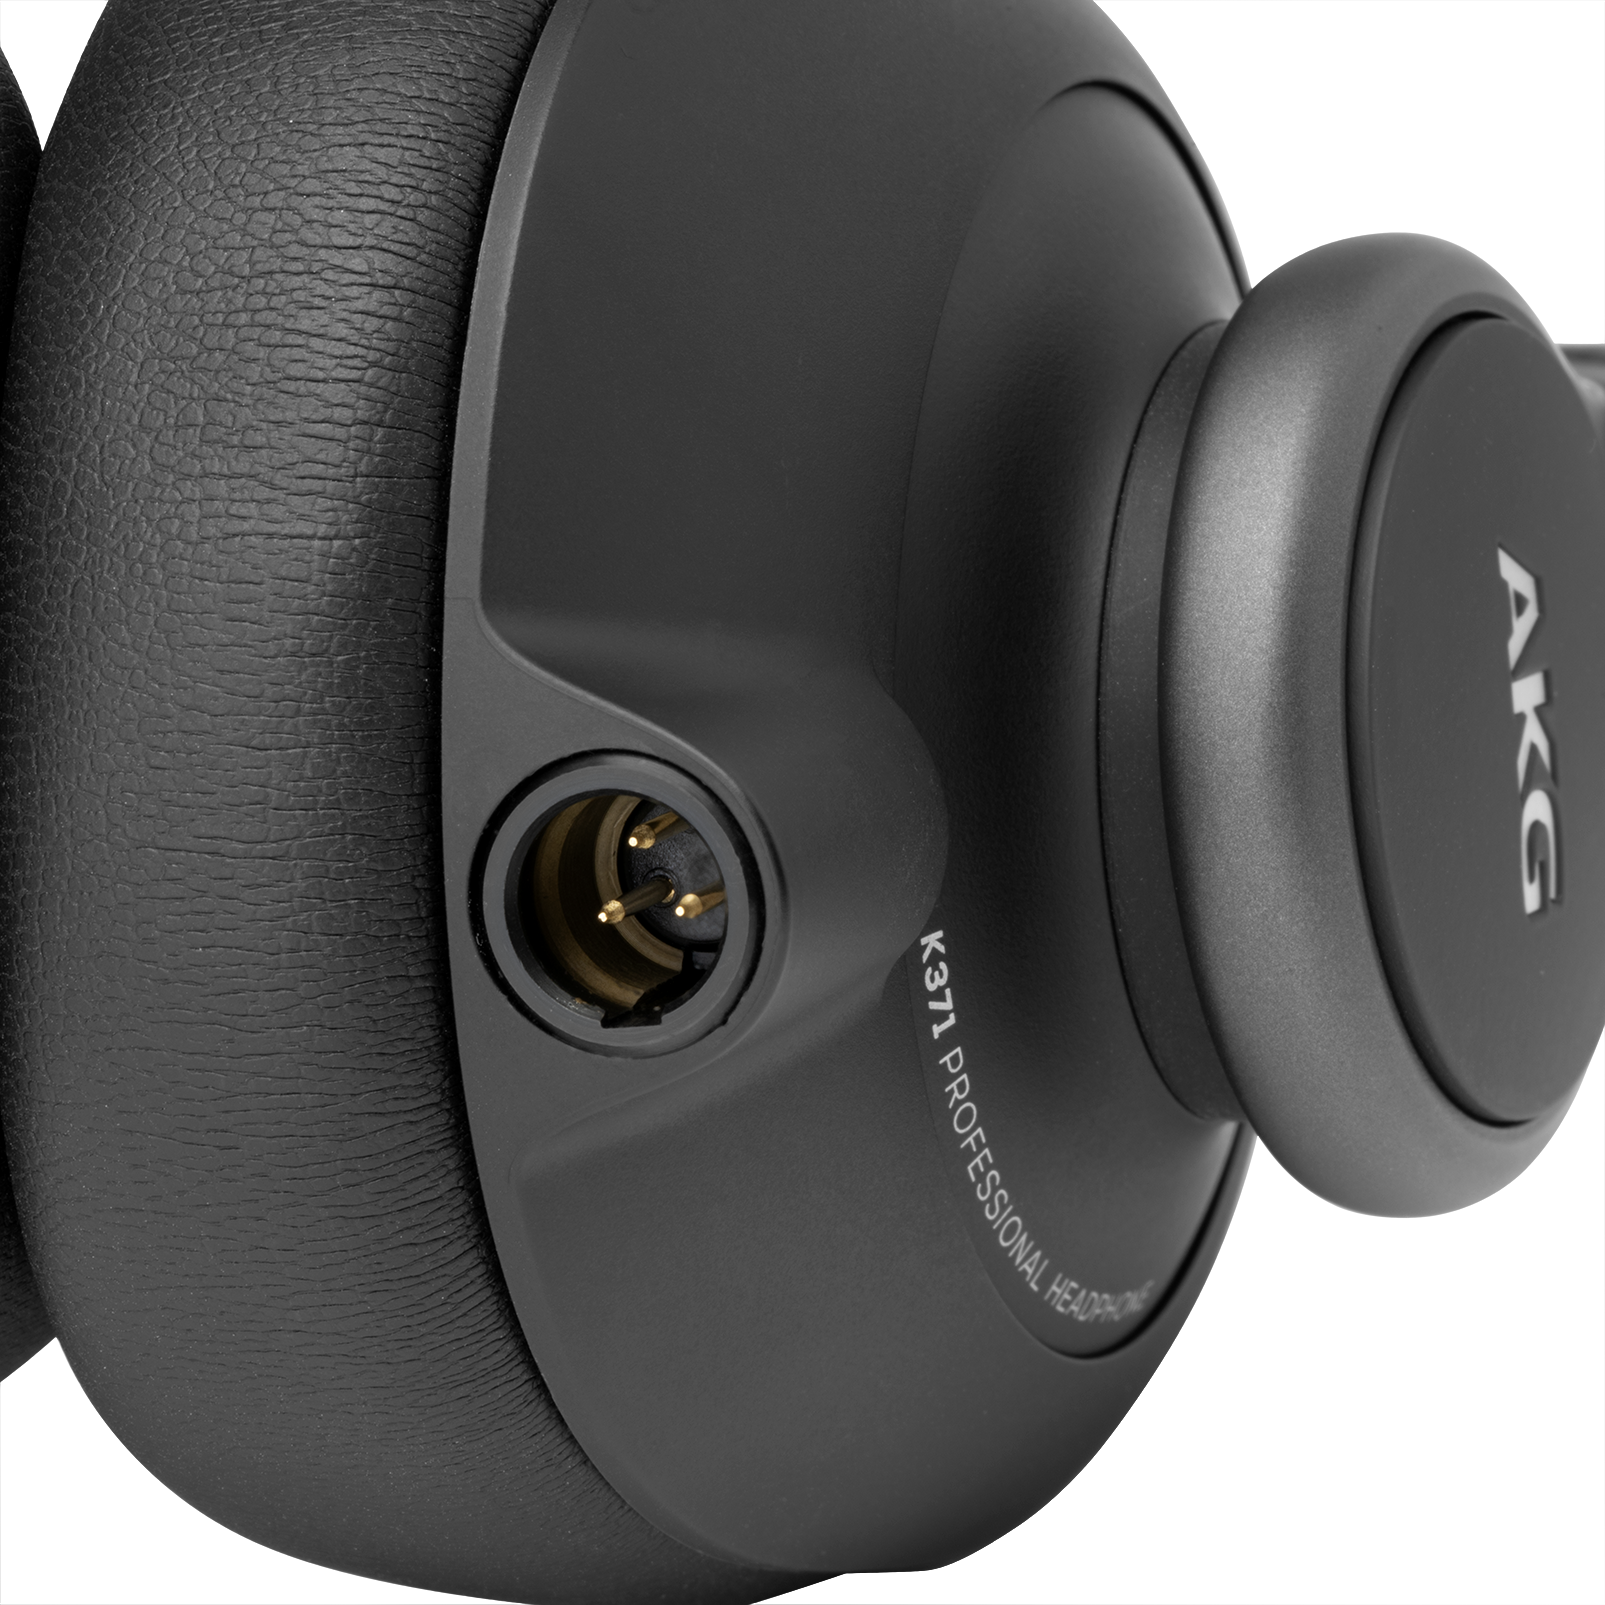 K371 - Black - Over-ear, closed-back, foldable studio headphones  - Detailshot 4